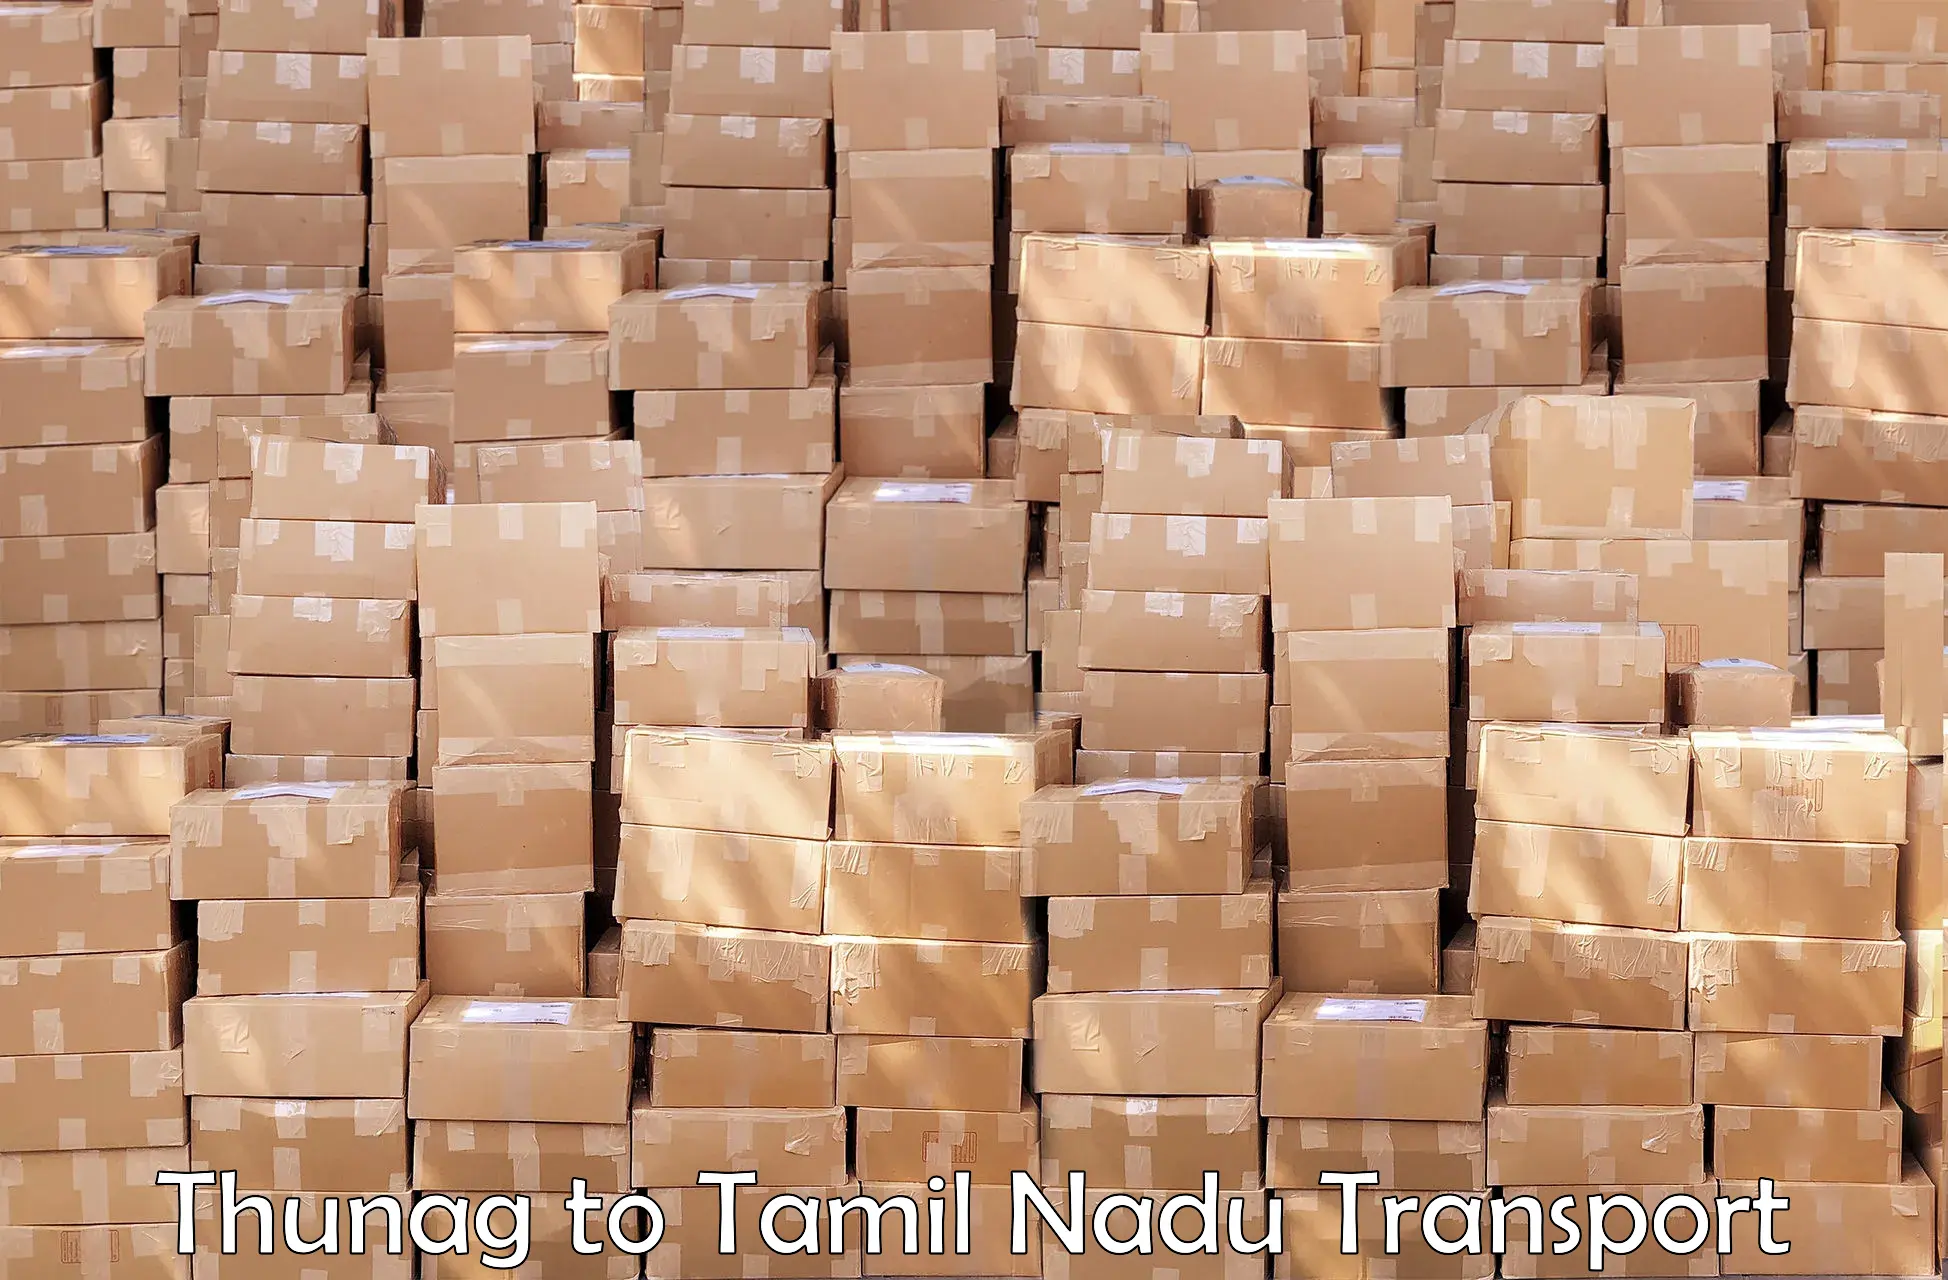 Pick up transport service Thunag to Thiruvadanai